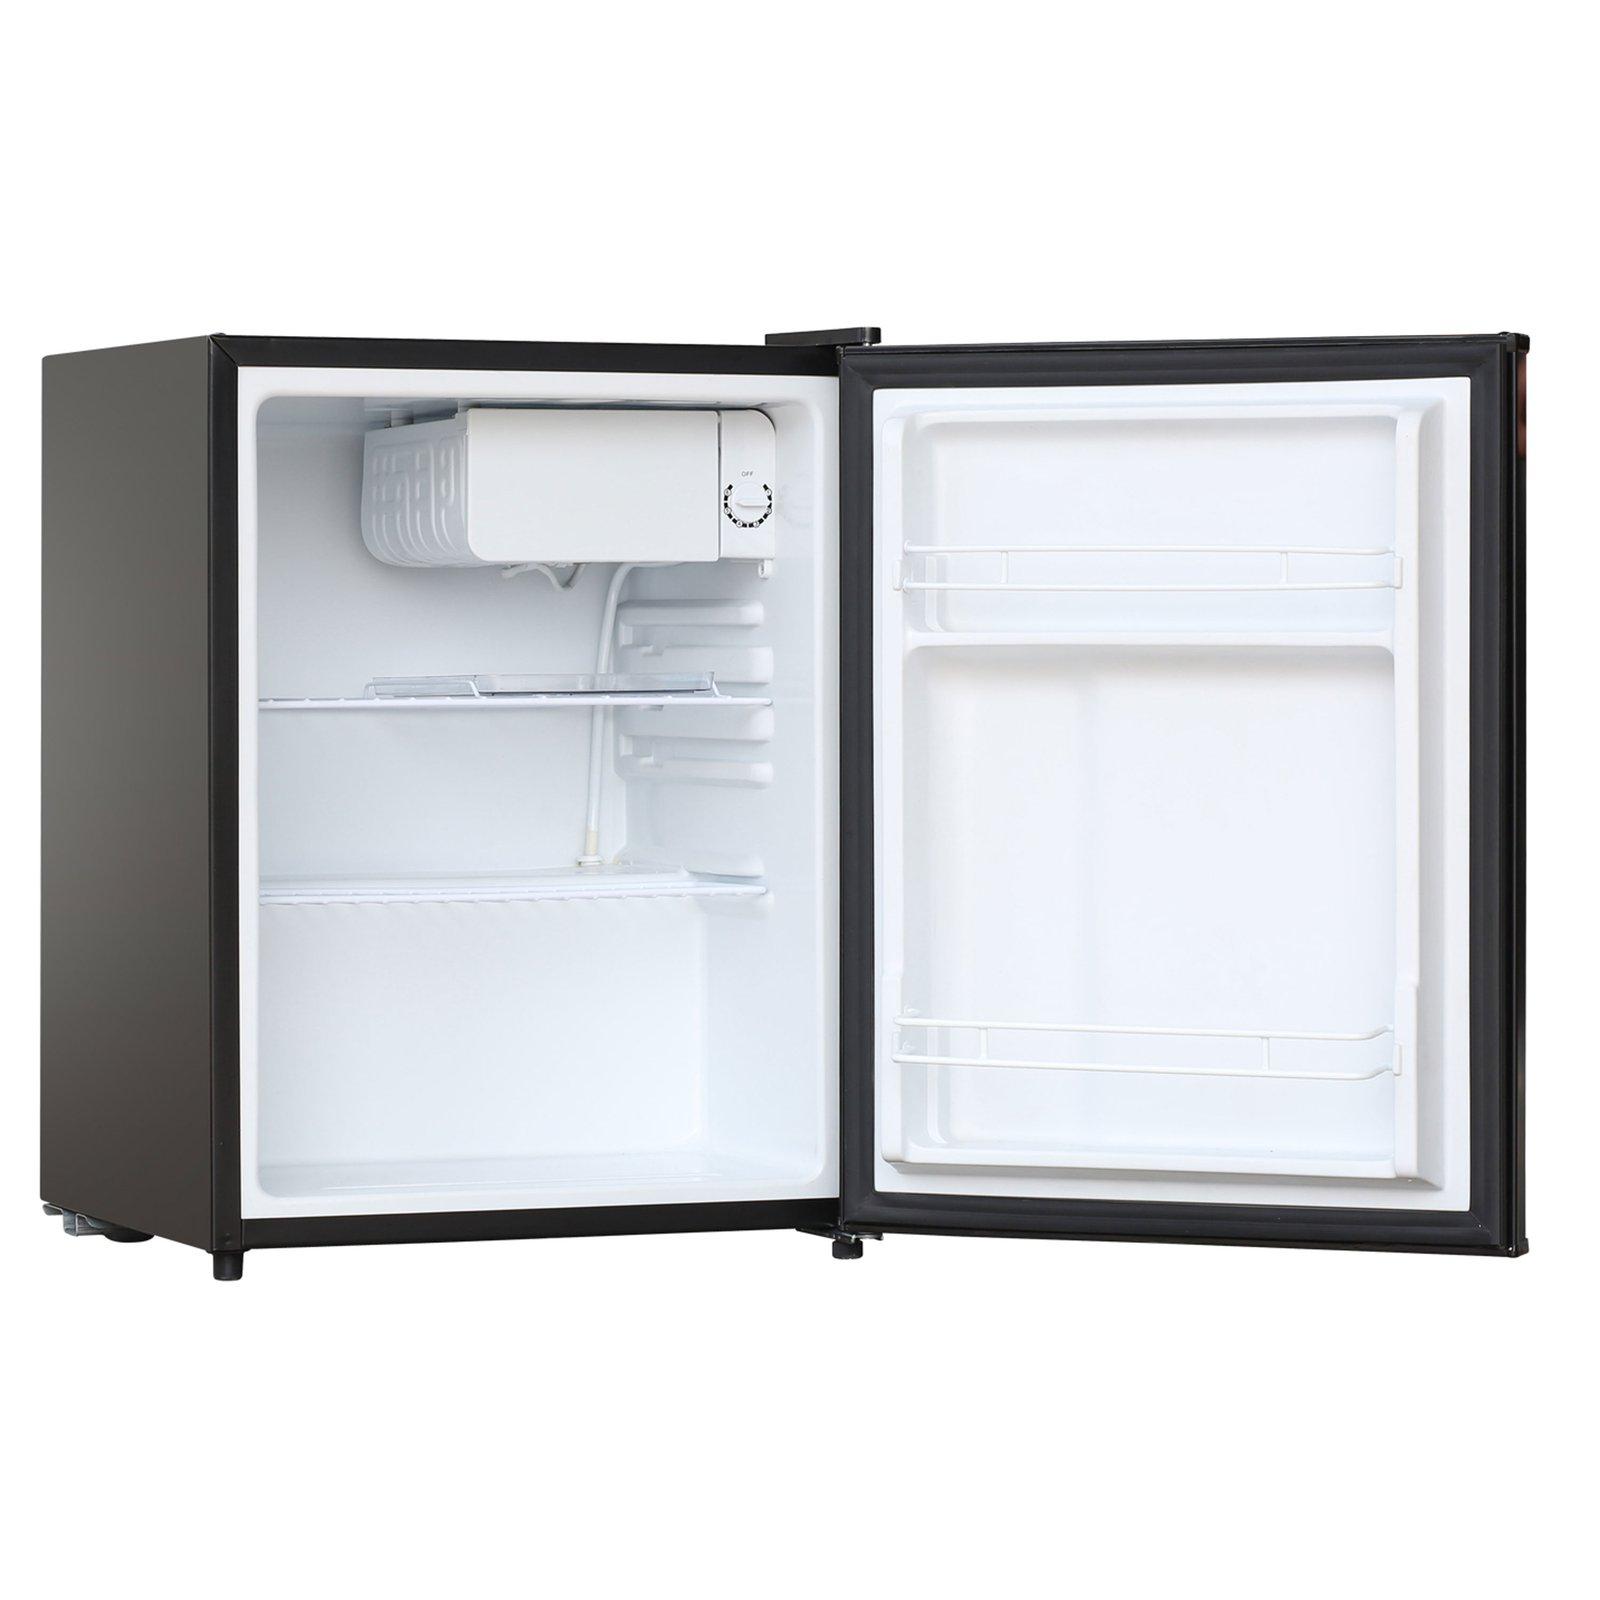 AVANTI RM24T1B 2.4 cu. ft. Compact Refrigerator